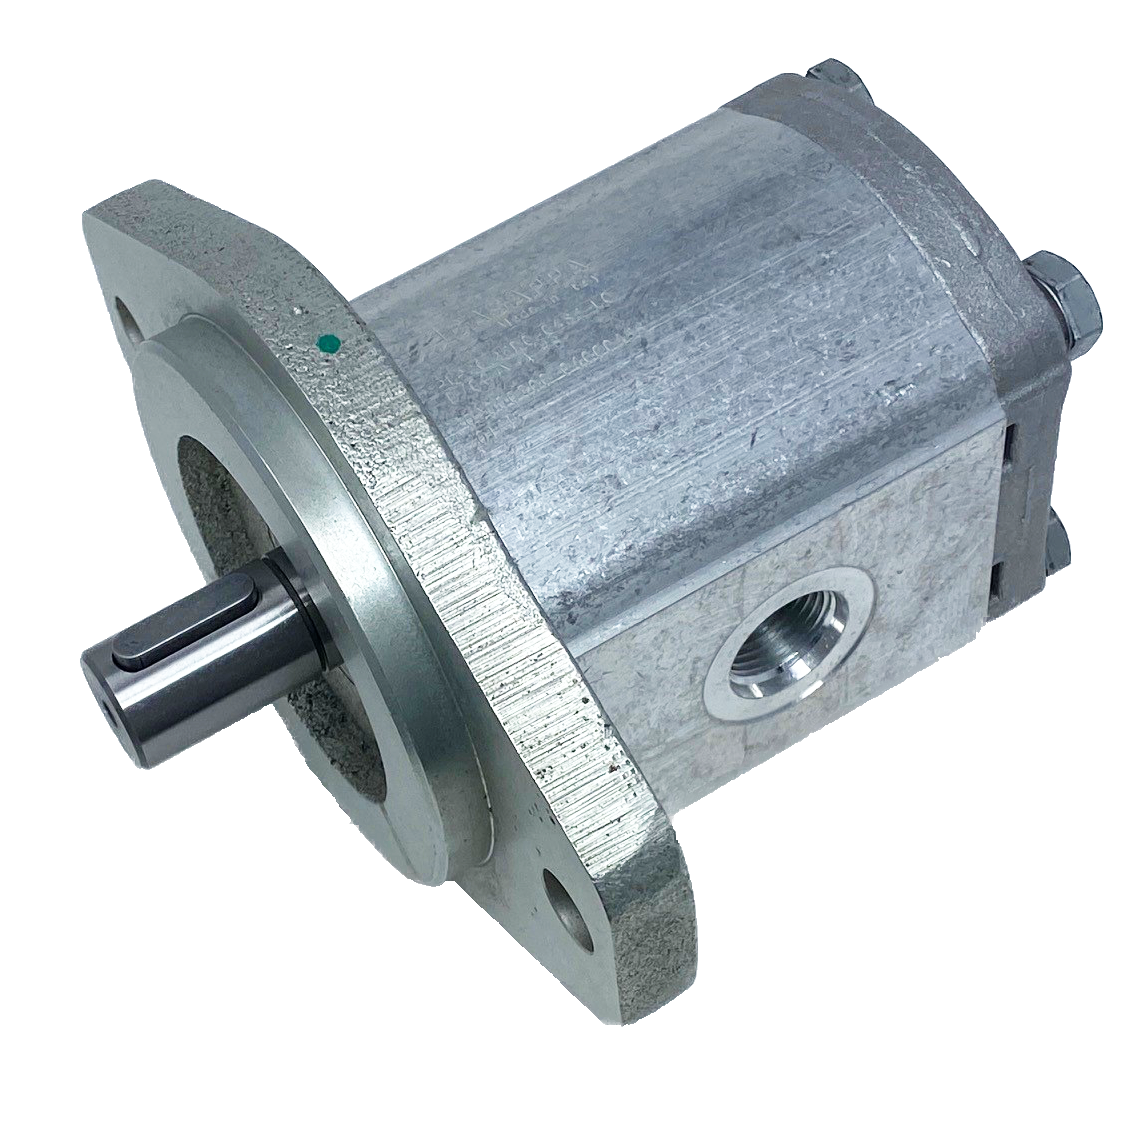 PLM20.20R0-32S5-LOC/OD-N-L : Casappa Polaris Gear Motor, 21.14cc, 2900psi, 3000RPM, Reversible, External Drain, 3/4" Bore x 1/4" Key Shaft, SAE B 2-Bolt Flange, 0.625 (5/8") #10 SAE In, 0.75 (3/4") #12 SAE Out, Aluminum Body, Cast Iron Flange